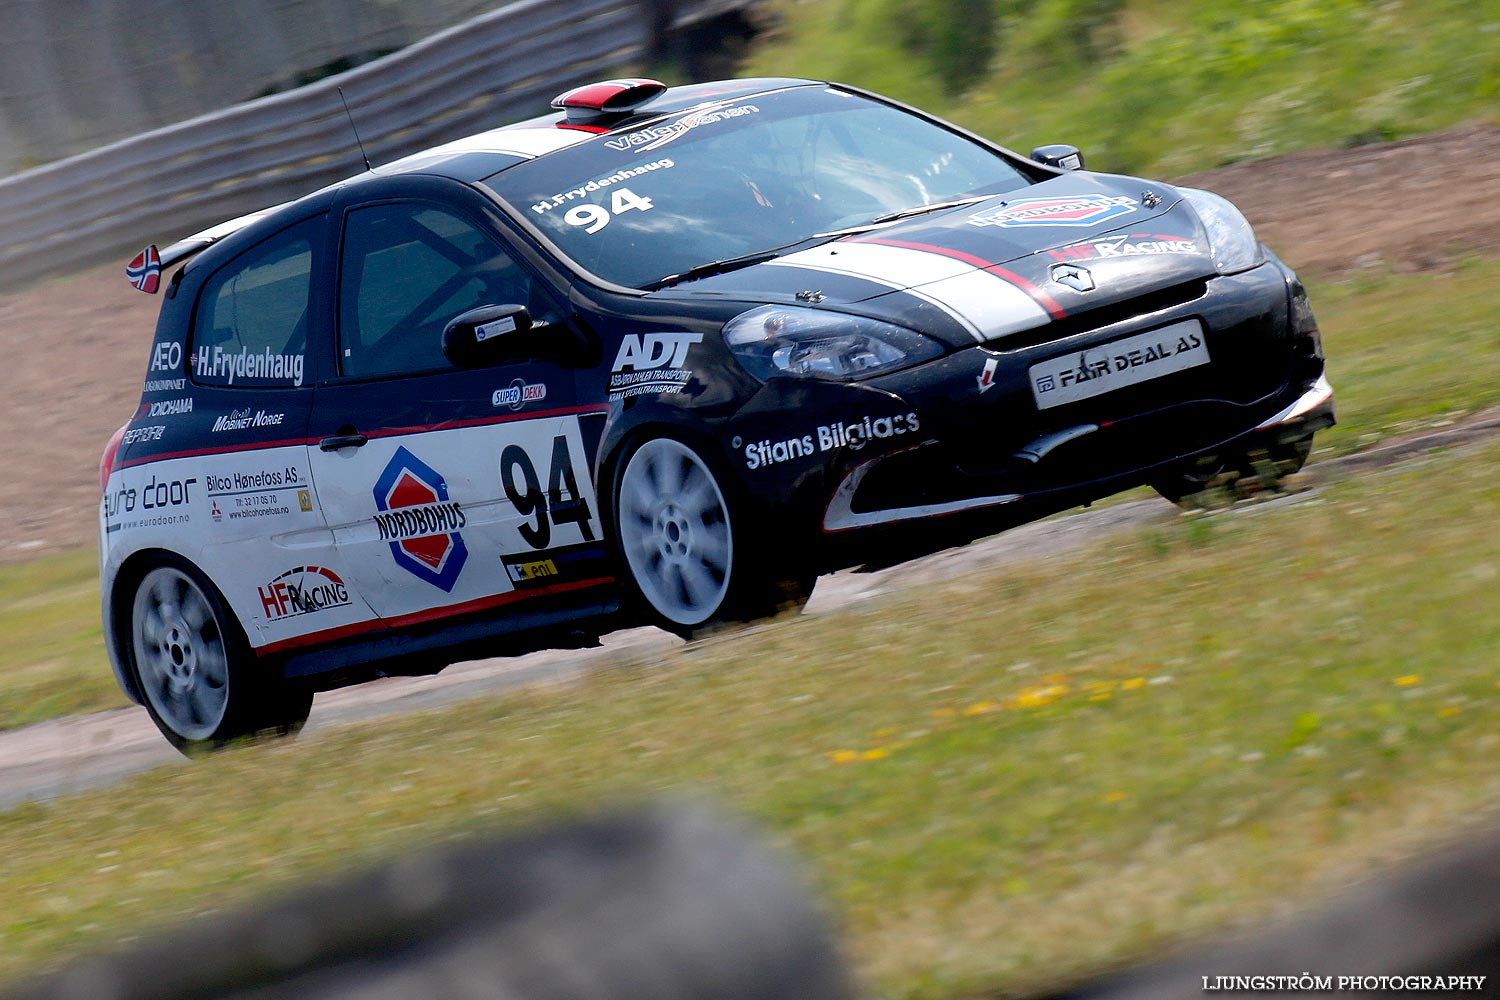 SSK Raceweek,mix,Kinnekulle Ring,Götene,Sverige,Motorsport,,2014,90484